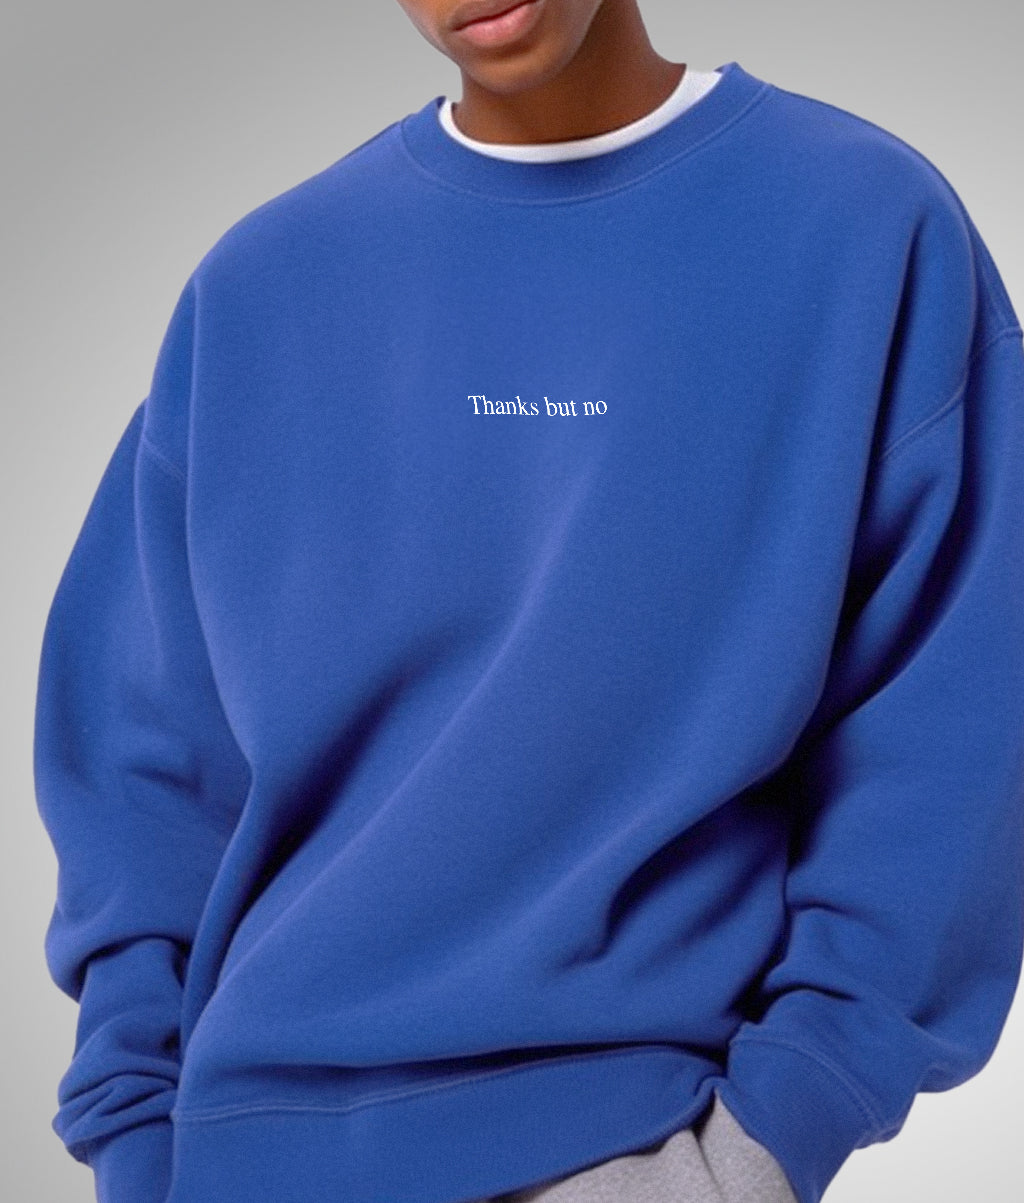 Sweatshirt - Thanks but no